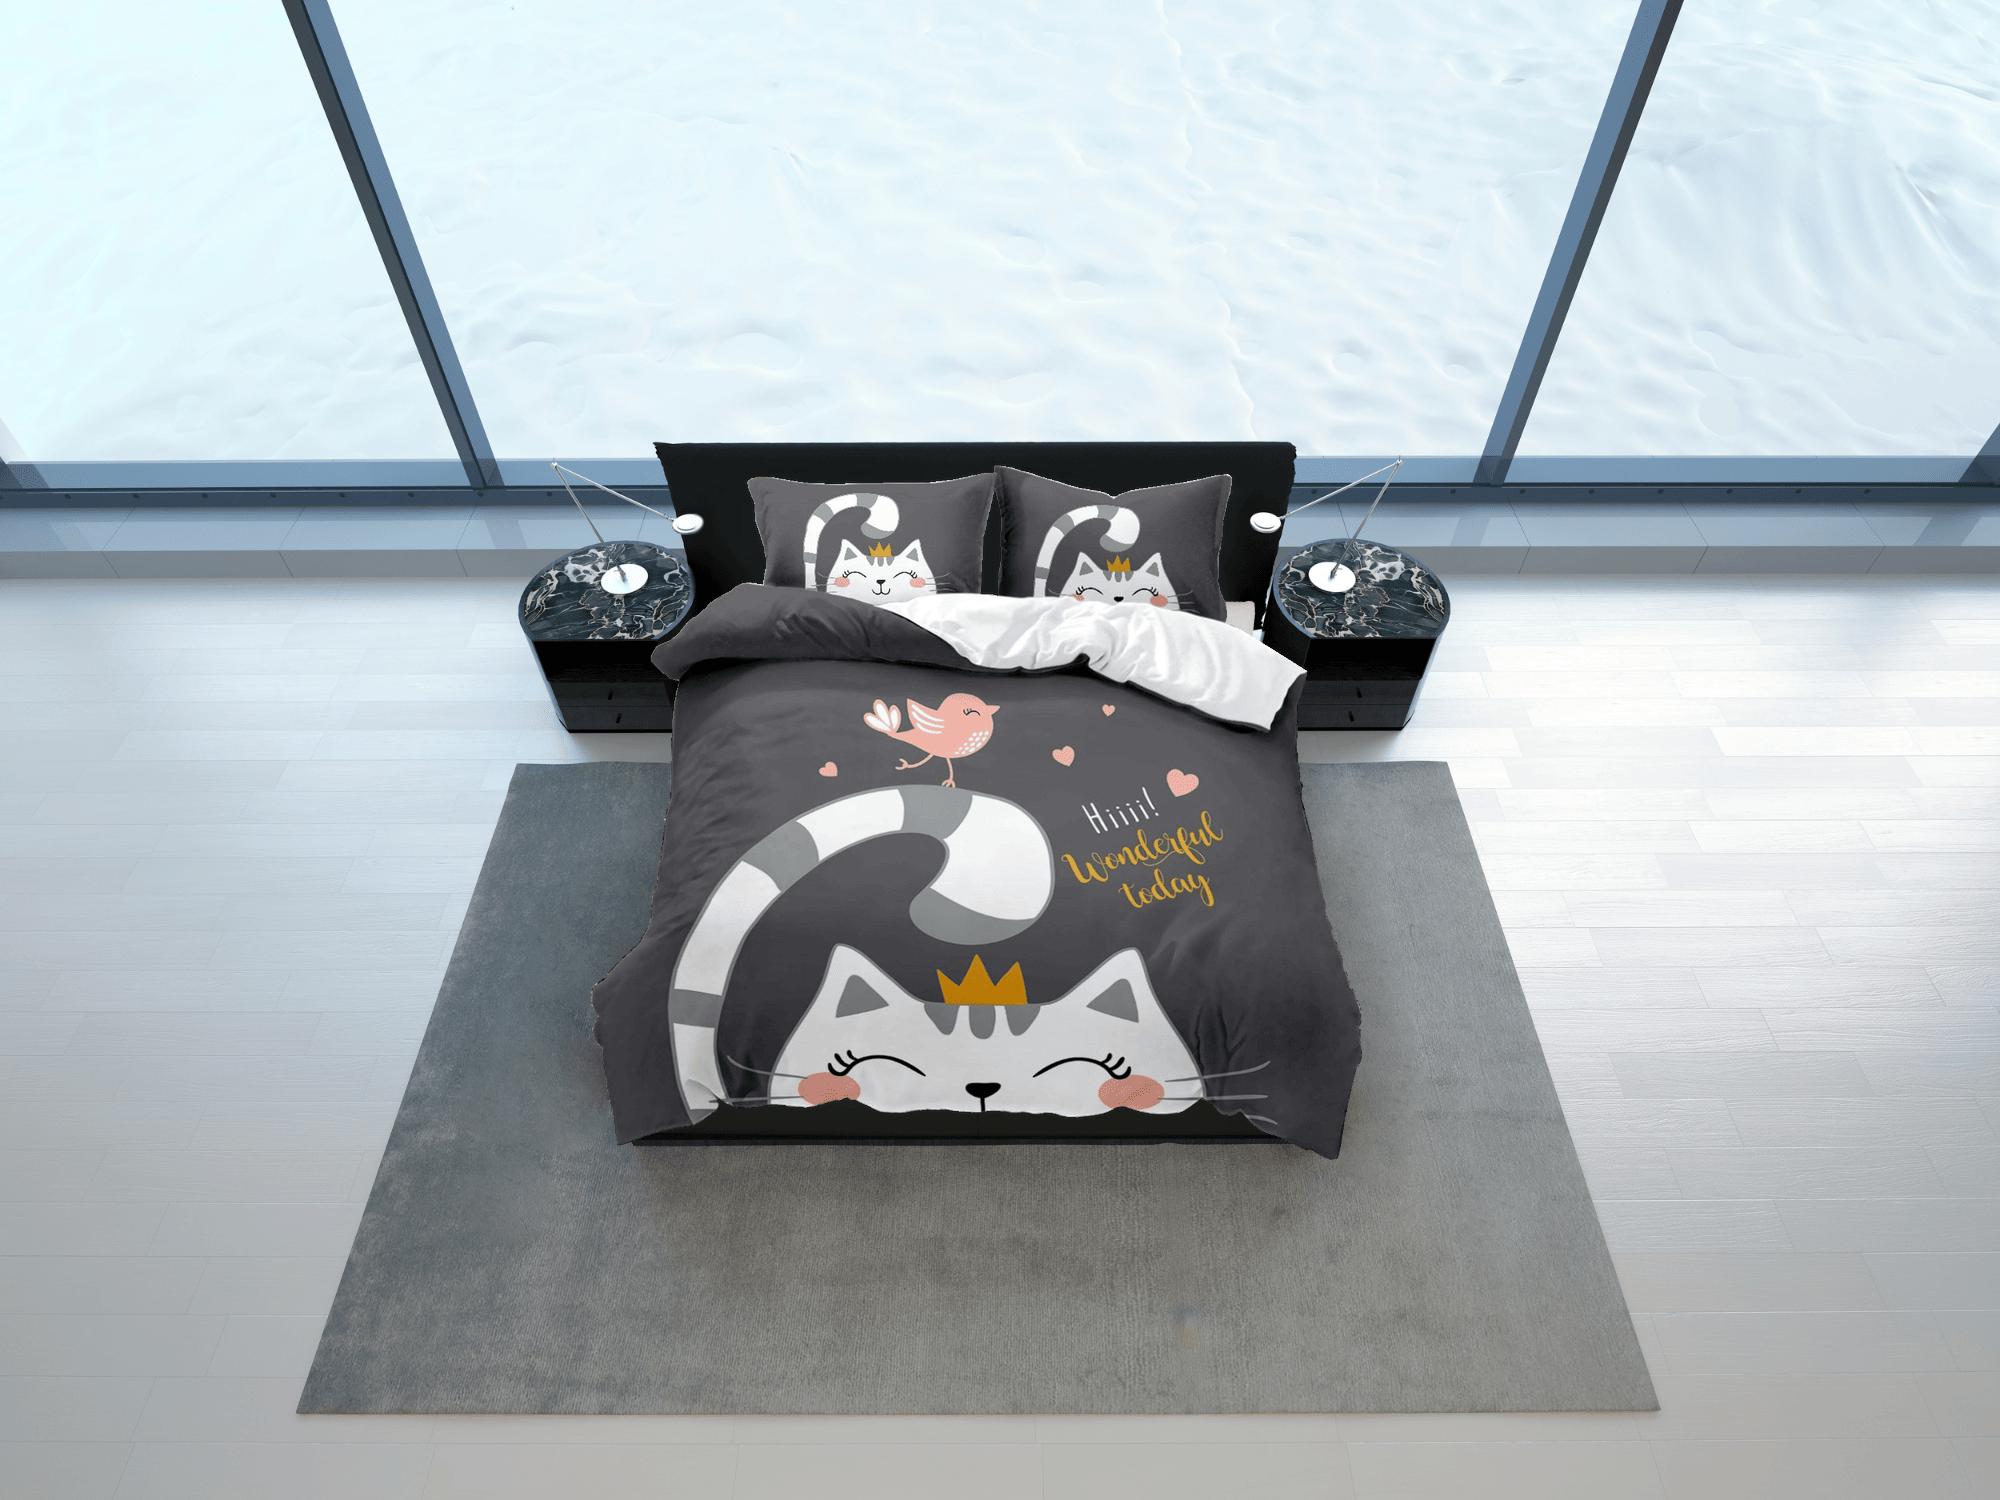 daintyduvet Princess cat bedding black, toddler bedding, kids duvet cover set, gift for cat lovers, baby bedding, baby shower gift, cute cat